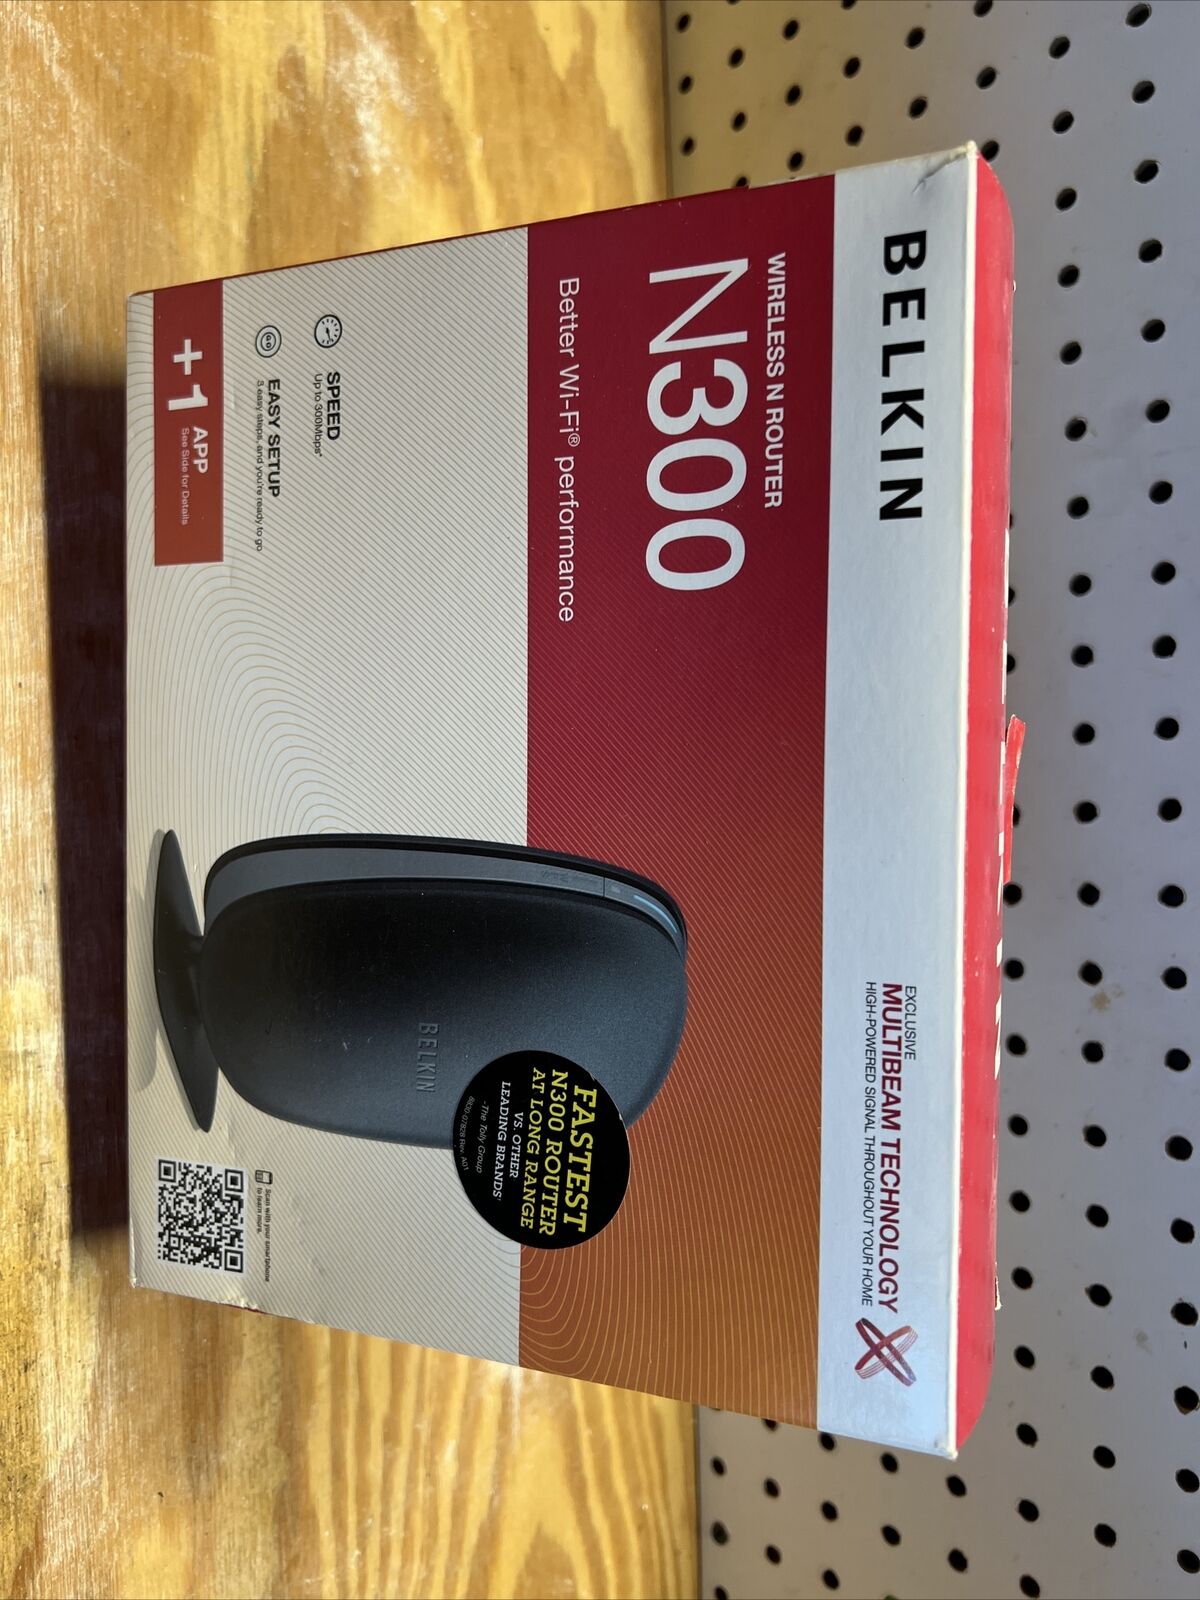 Belkin N300 300 Mbps 4-Port 10/100 Wireless N Router (F9K1002) With Box